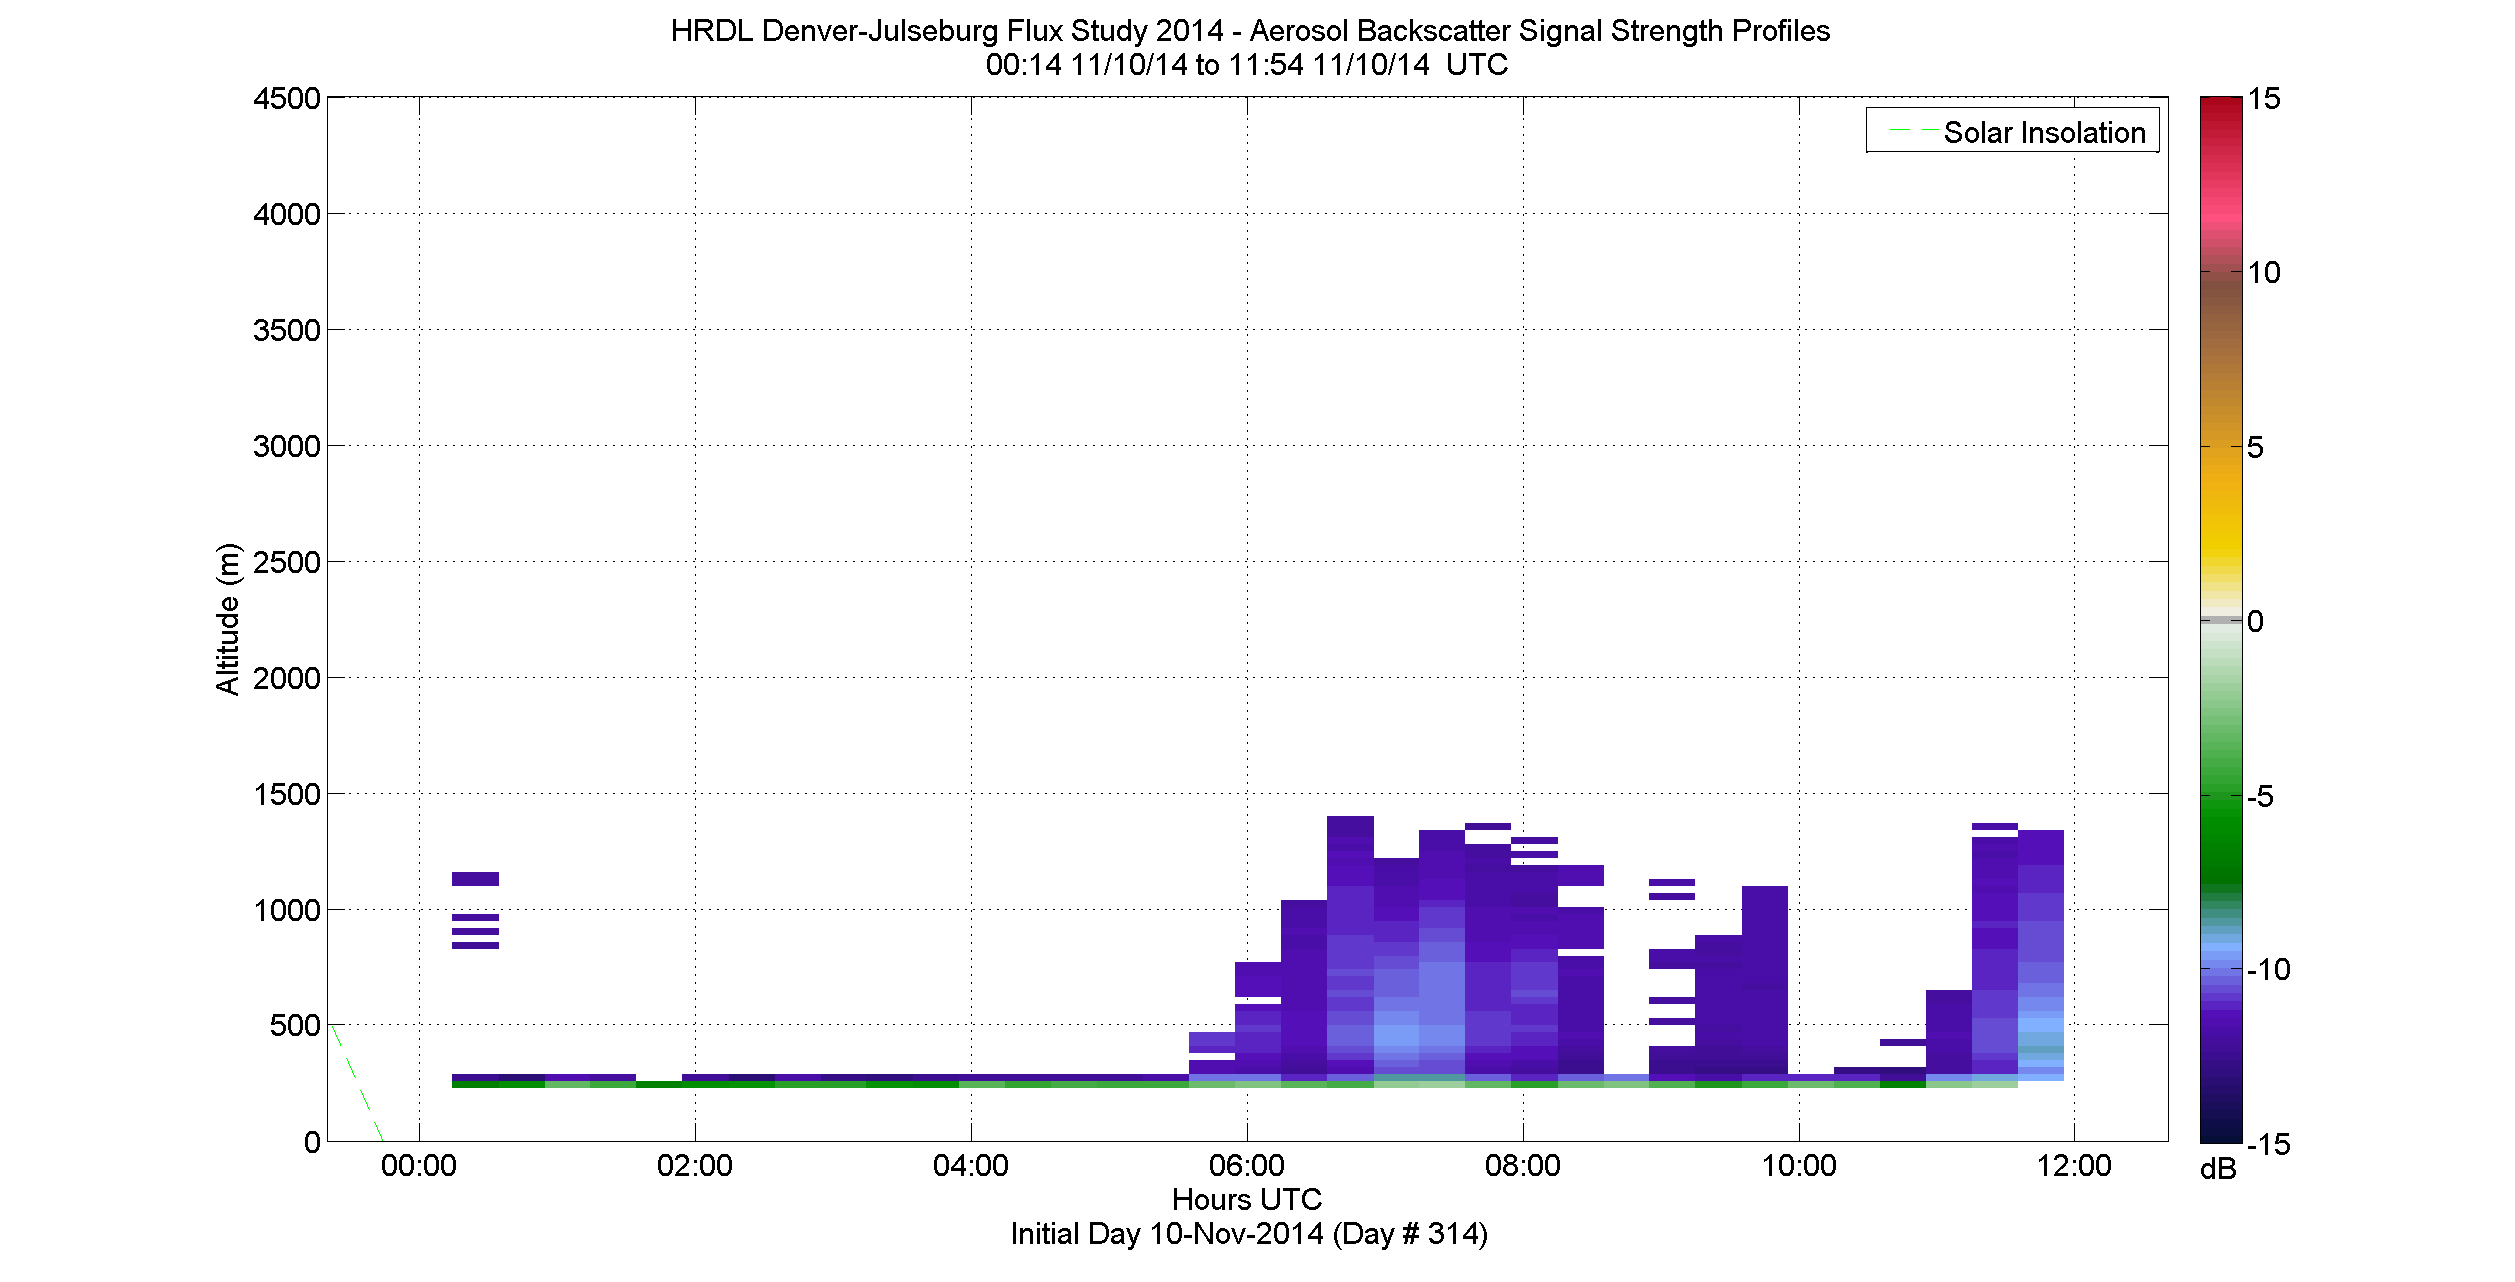 HRDL vertical intensity profile - November 10 am